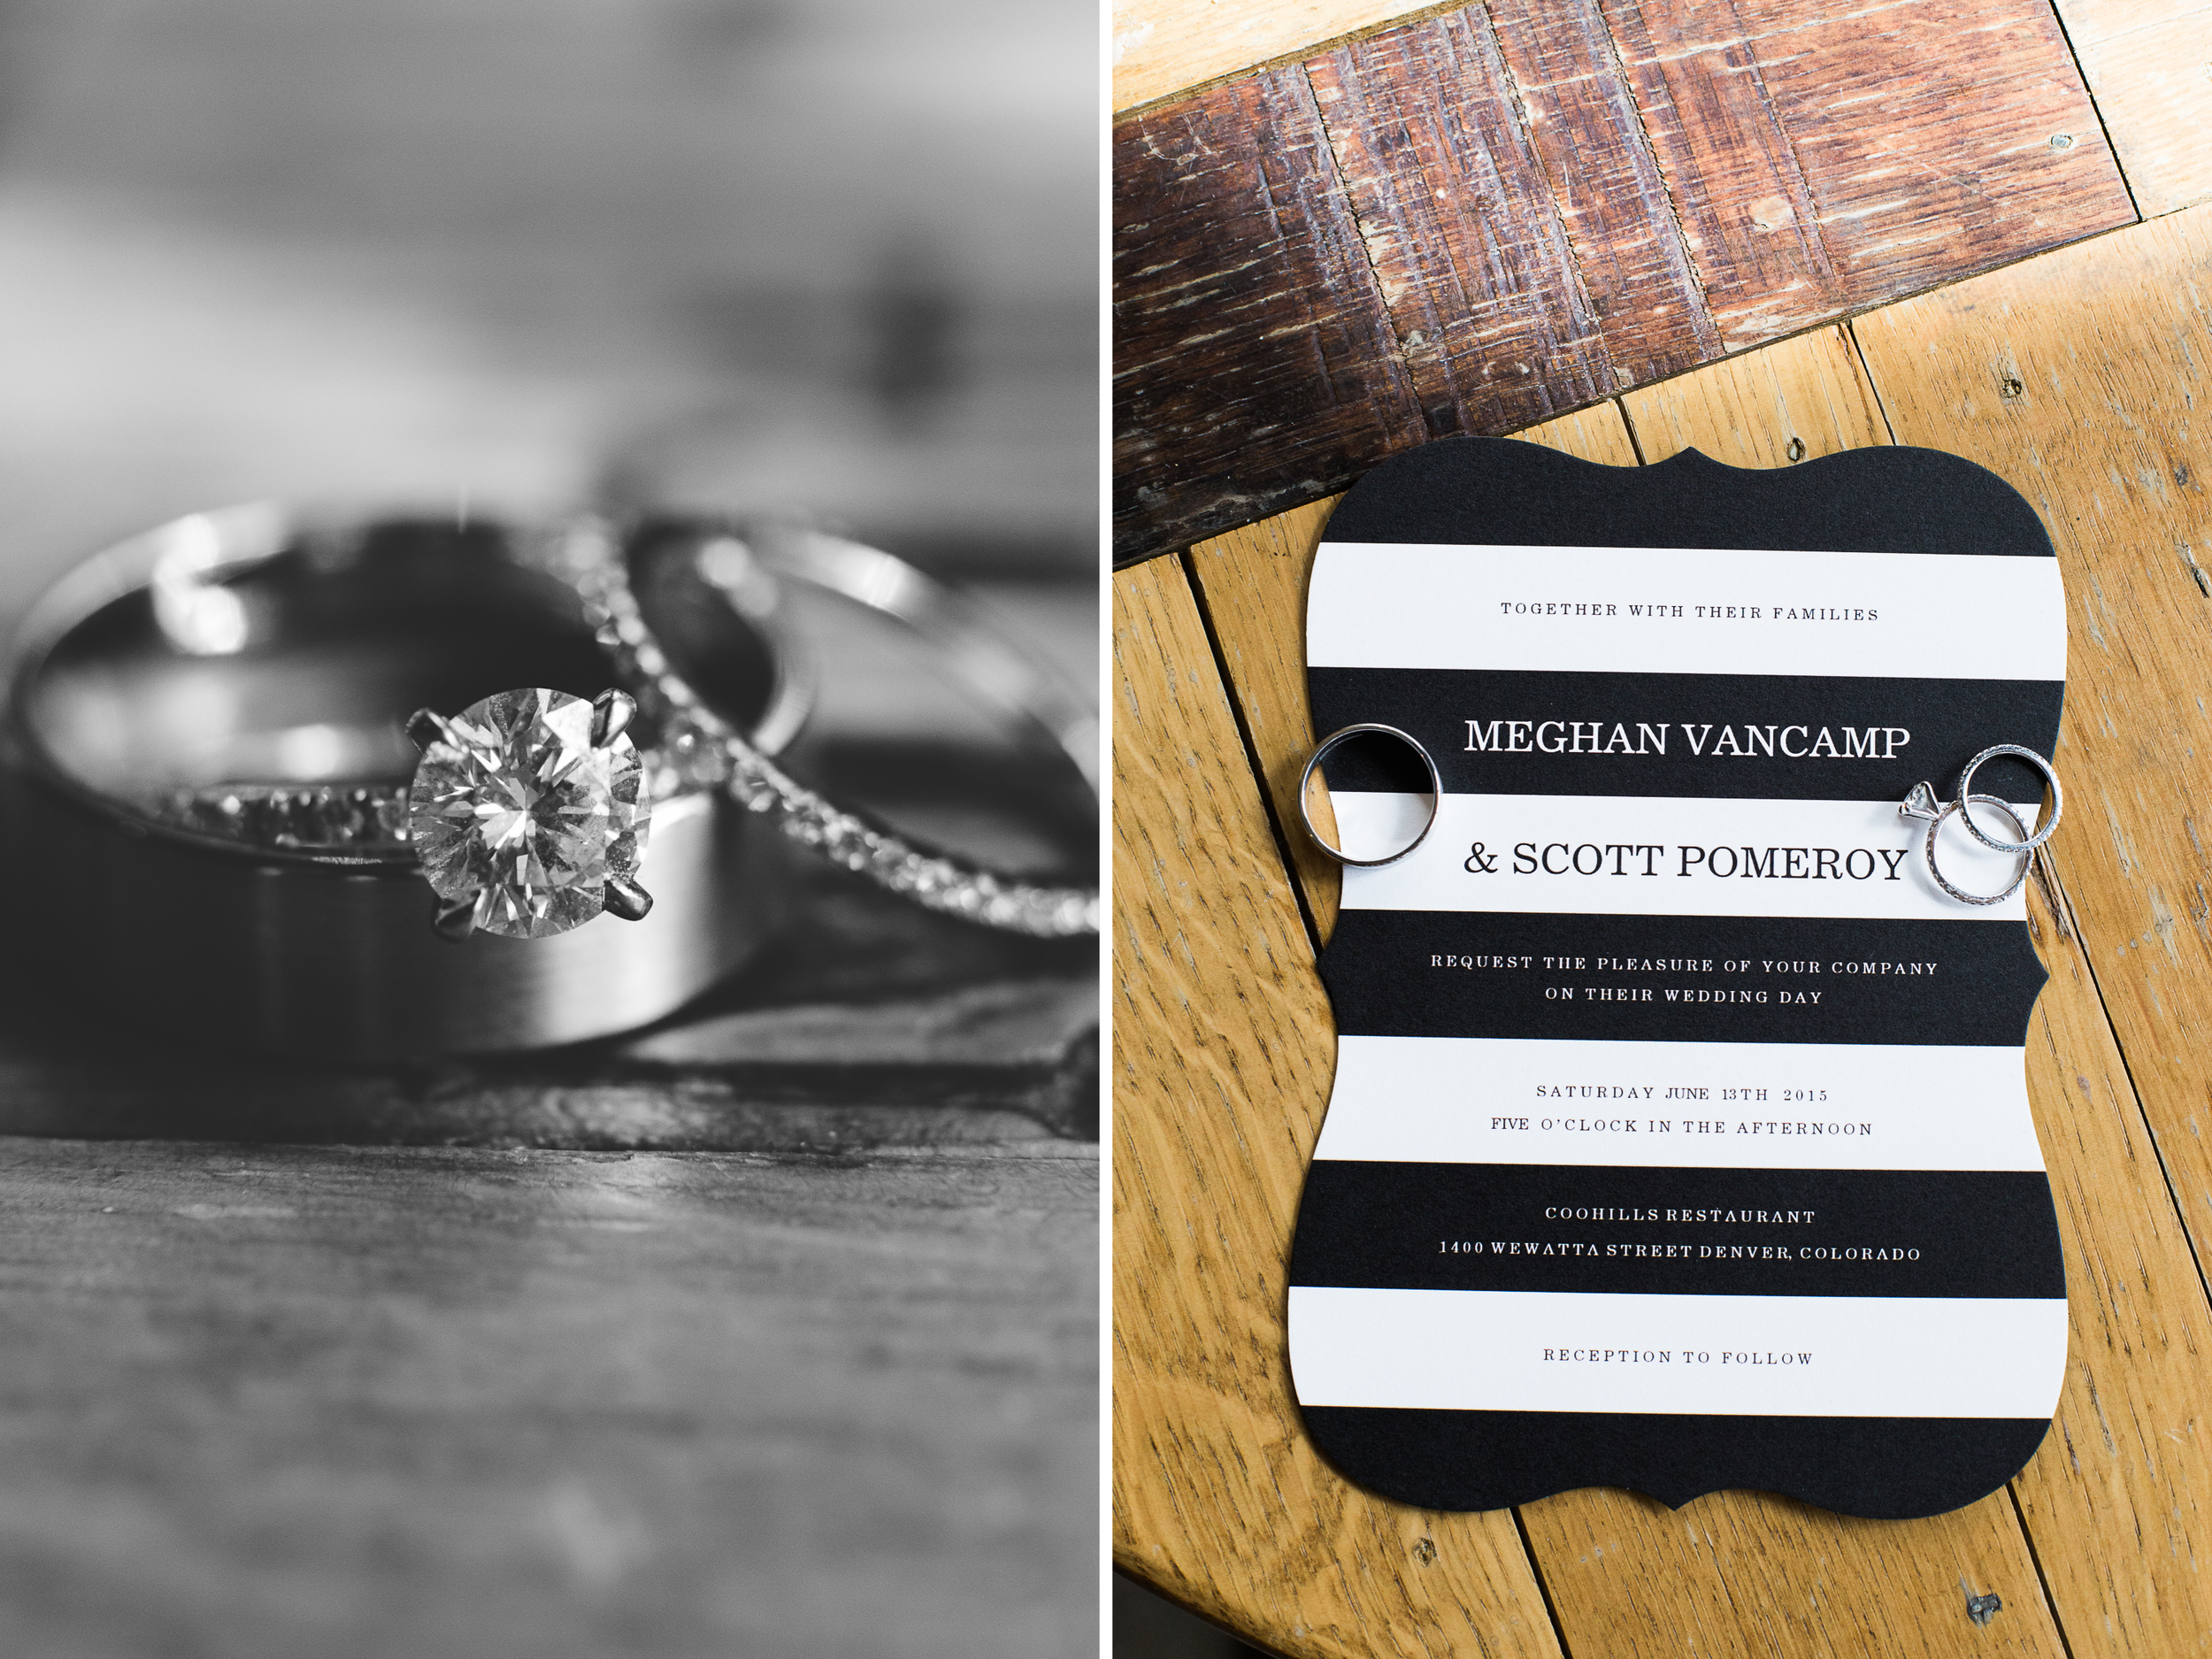 Coohills Wedding Photographer - wedding rings and invitation